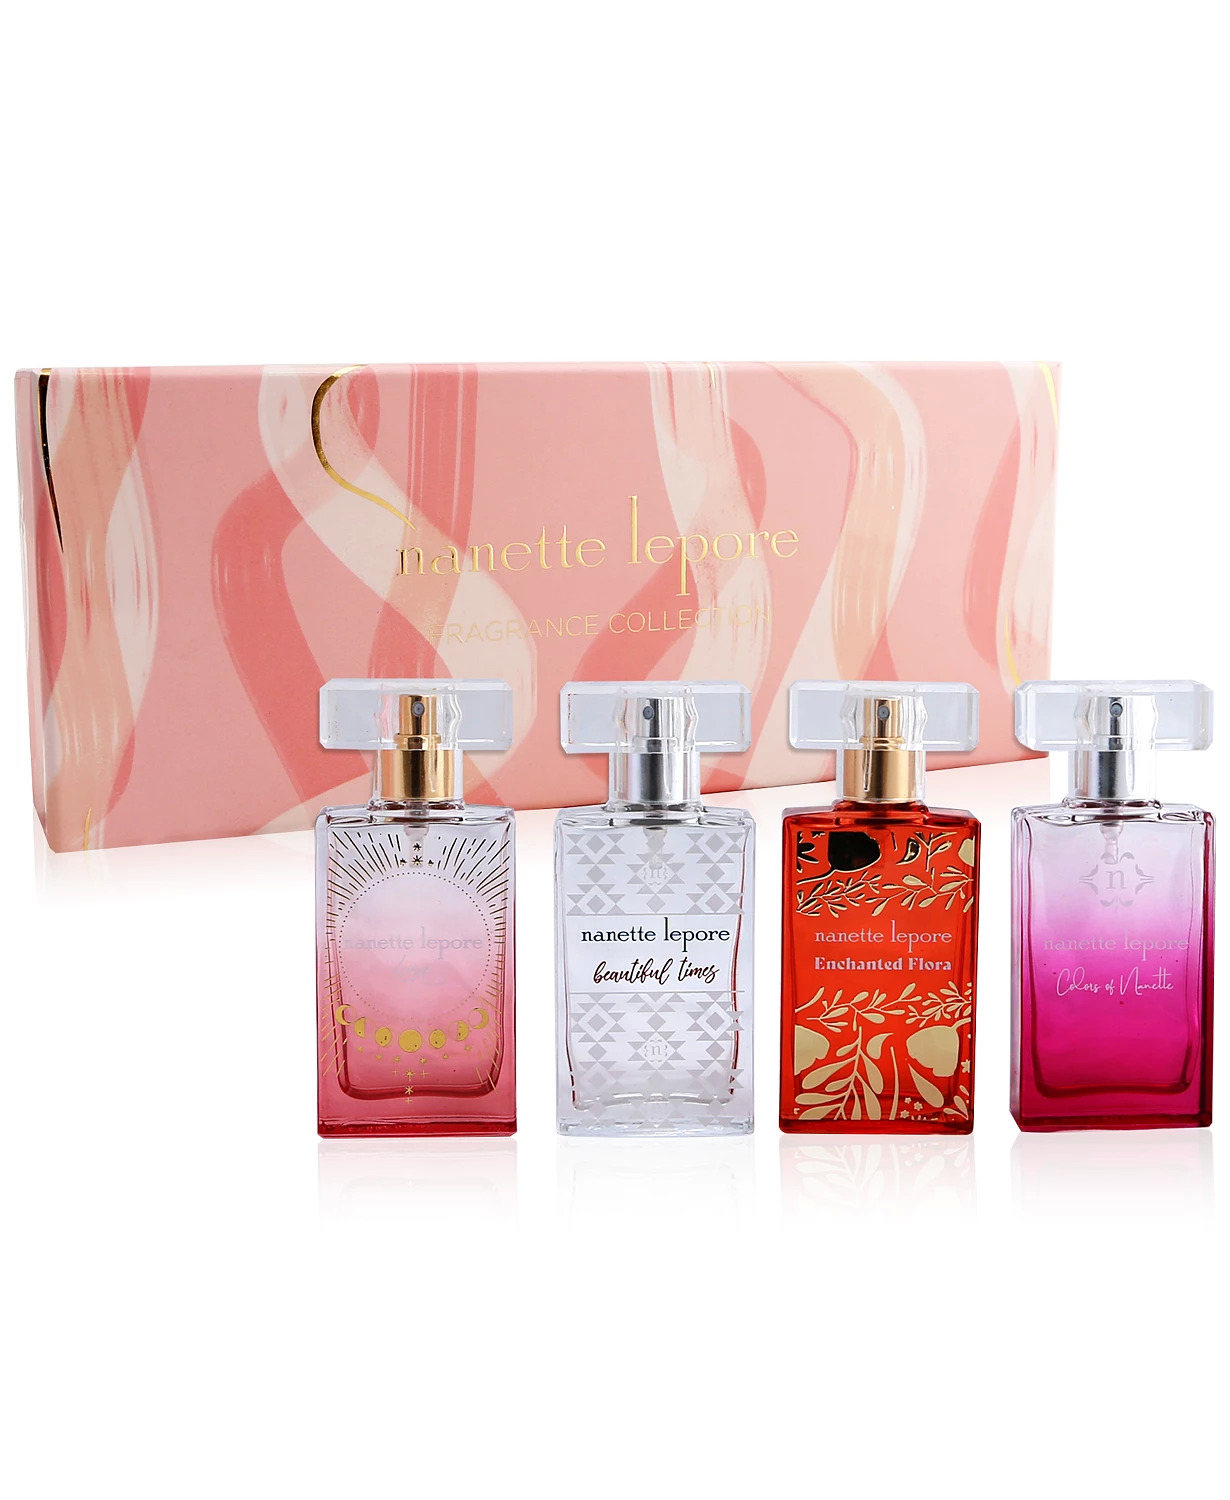 Perfume Gift Sets: 4-Pc Nanette Lepore Fragrance Gift Set, 3-Pc Catherine Malandrino Luxe de Venise Gift Set & More $25 Each + $10 Slickdeals Cashback + Free Shipping